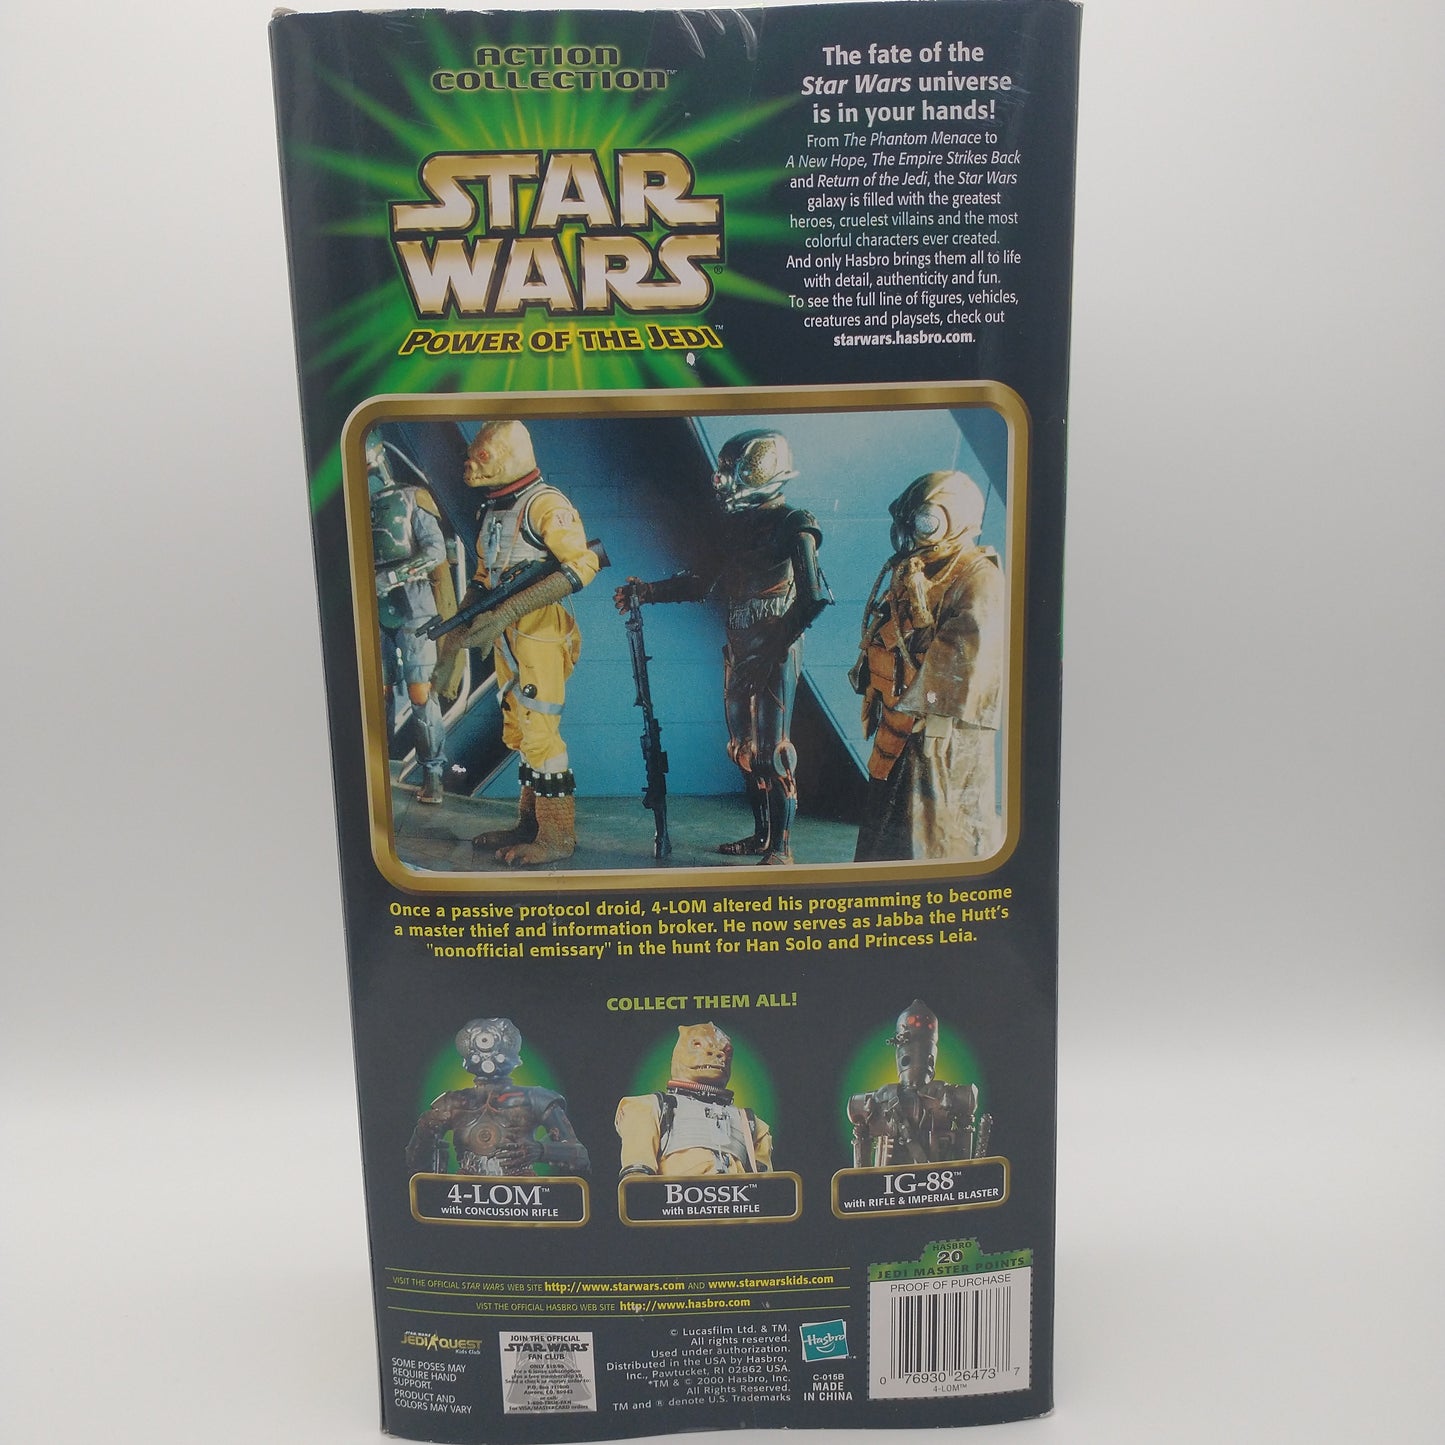 Star Wars POTJ 4-LOM Action Figure Hasbro 2000